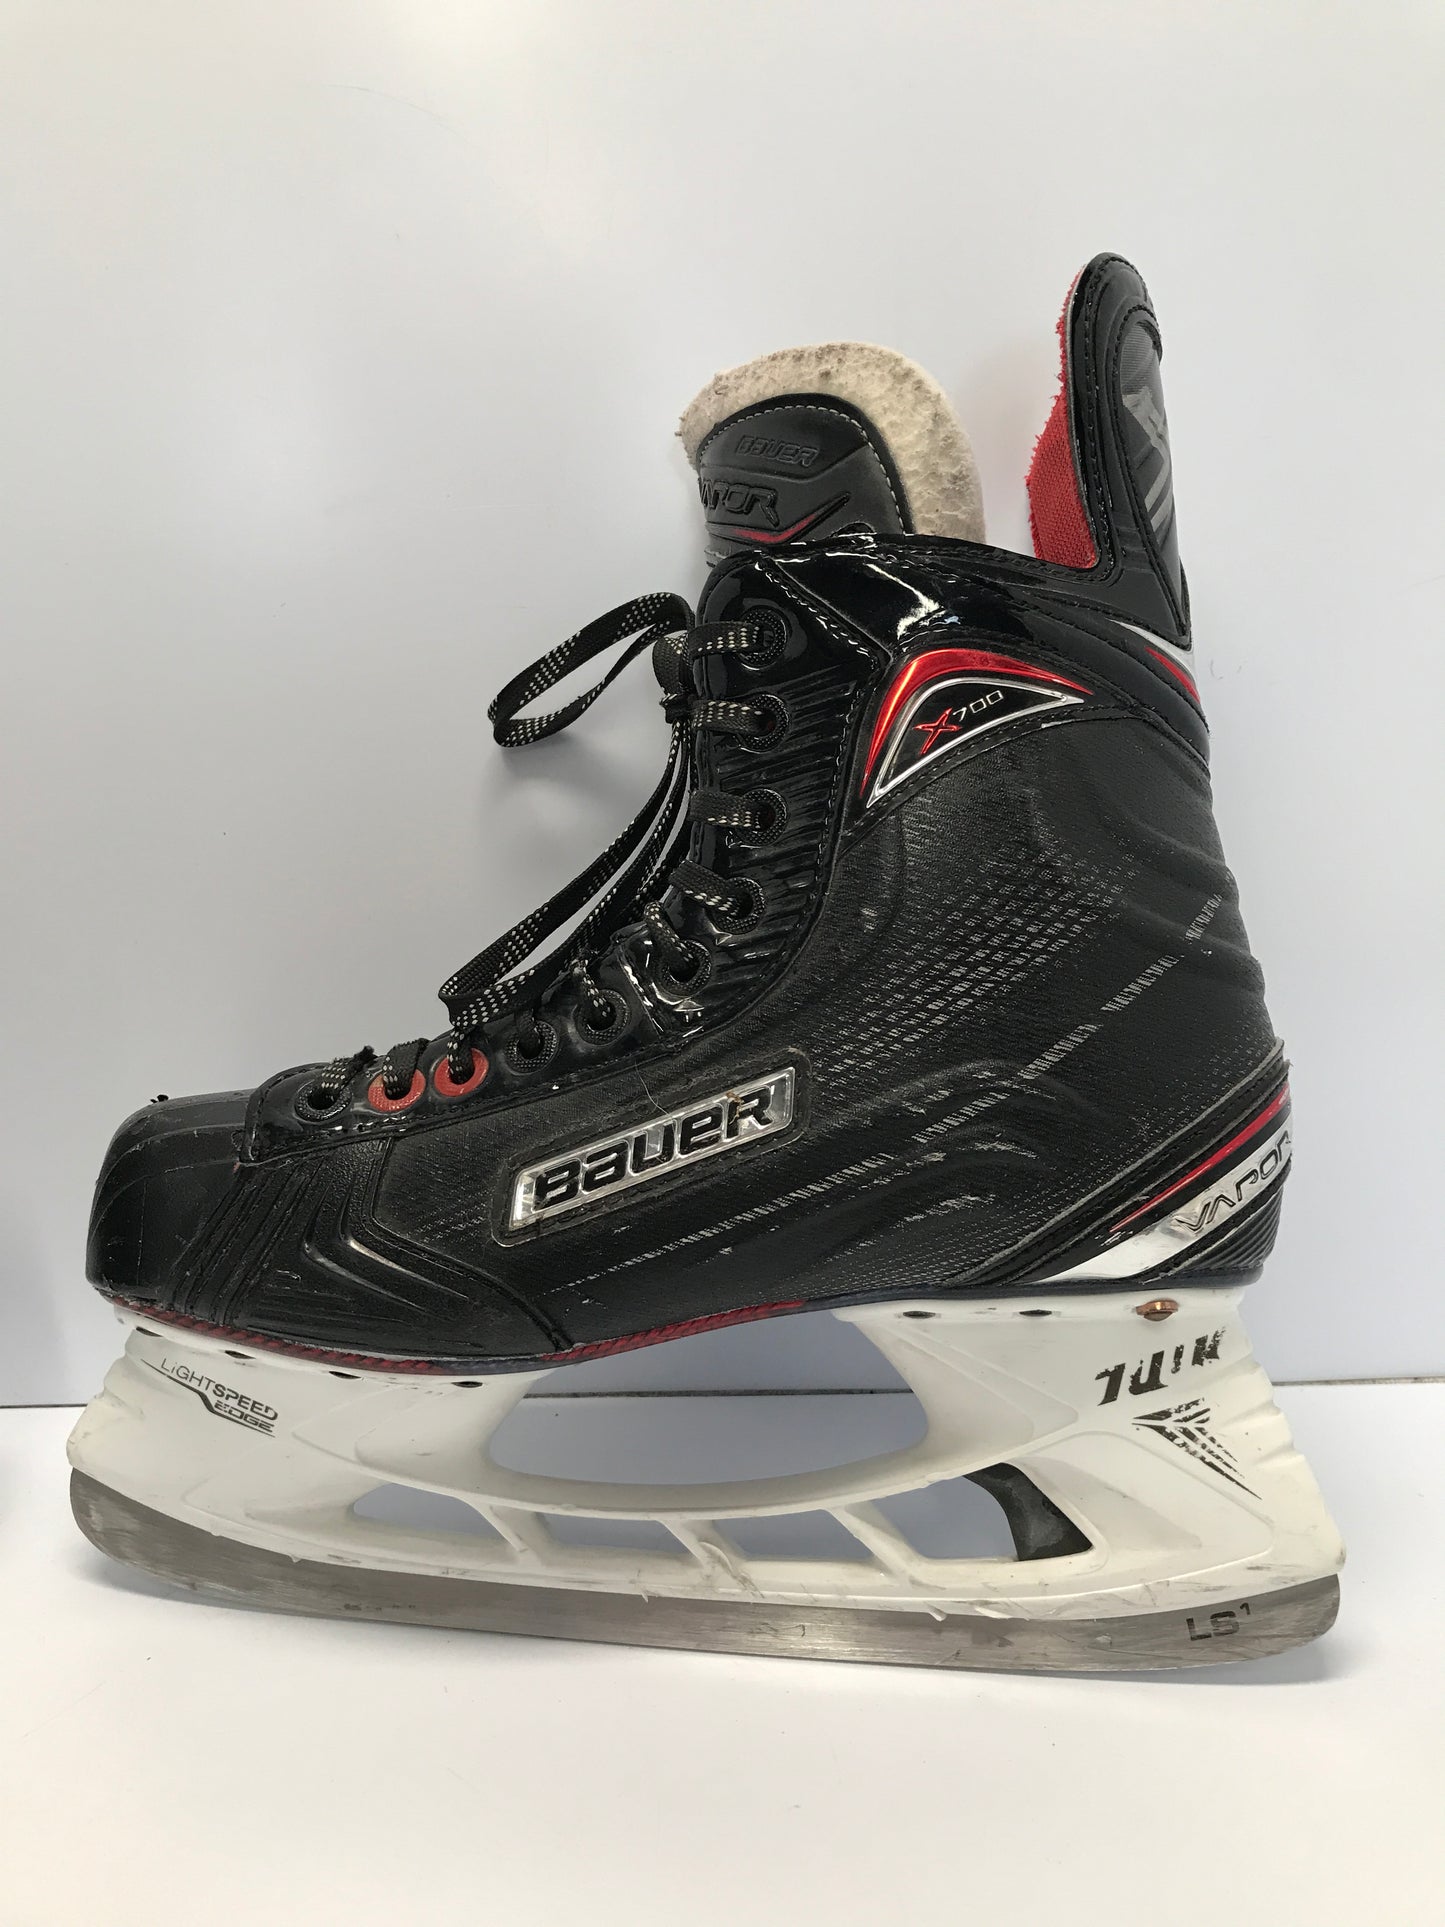 Hockey Skates Men's Size 8.5 Shoe 7 Skate Bauer X700